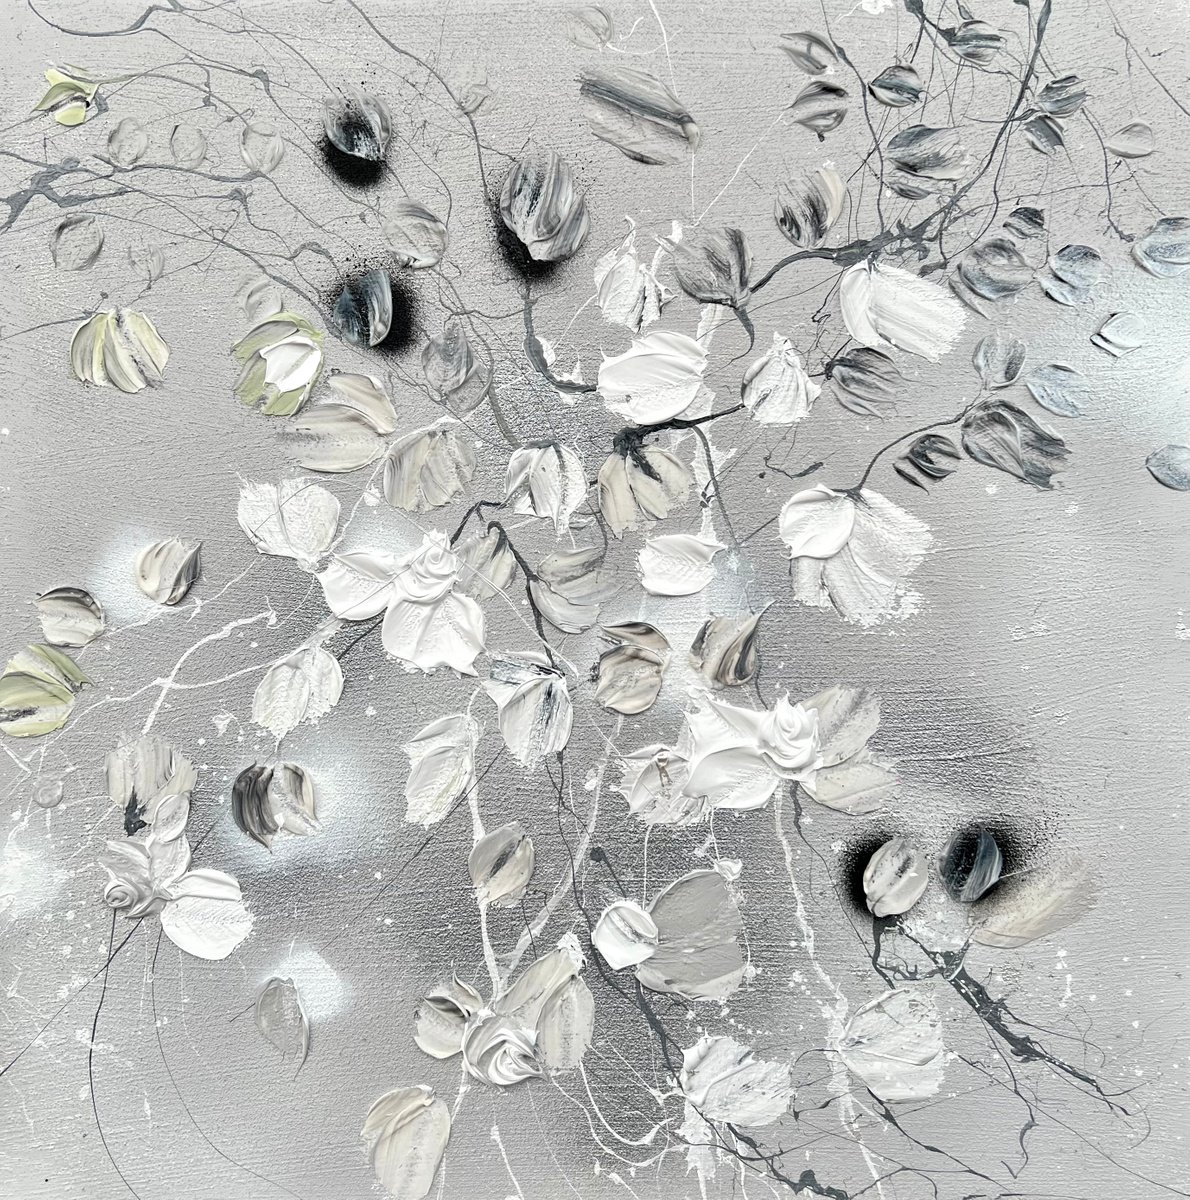 Silver Fog" acrylic square artwork with roses 50x50cm by Anastassia Skopp